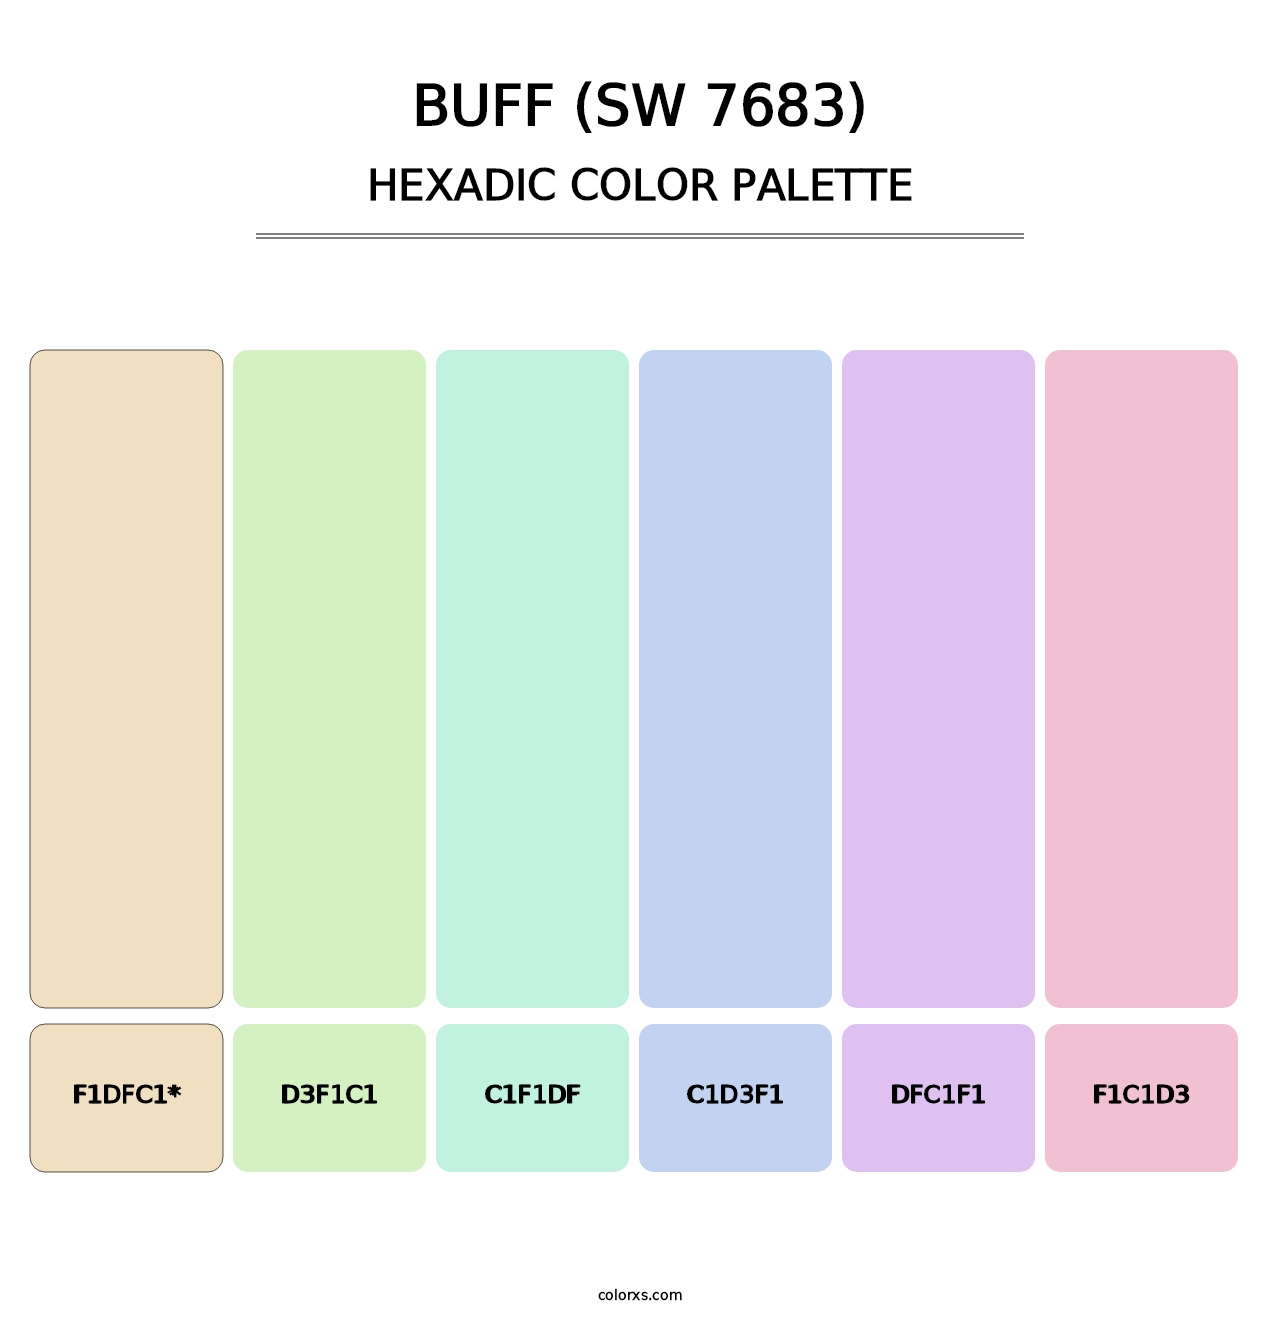 Buff (SW 7683) - Hexadic Color Palette